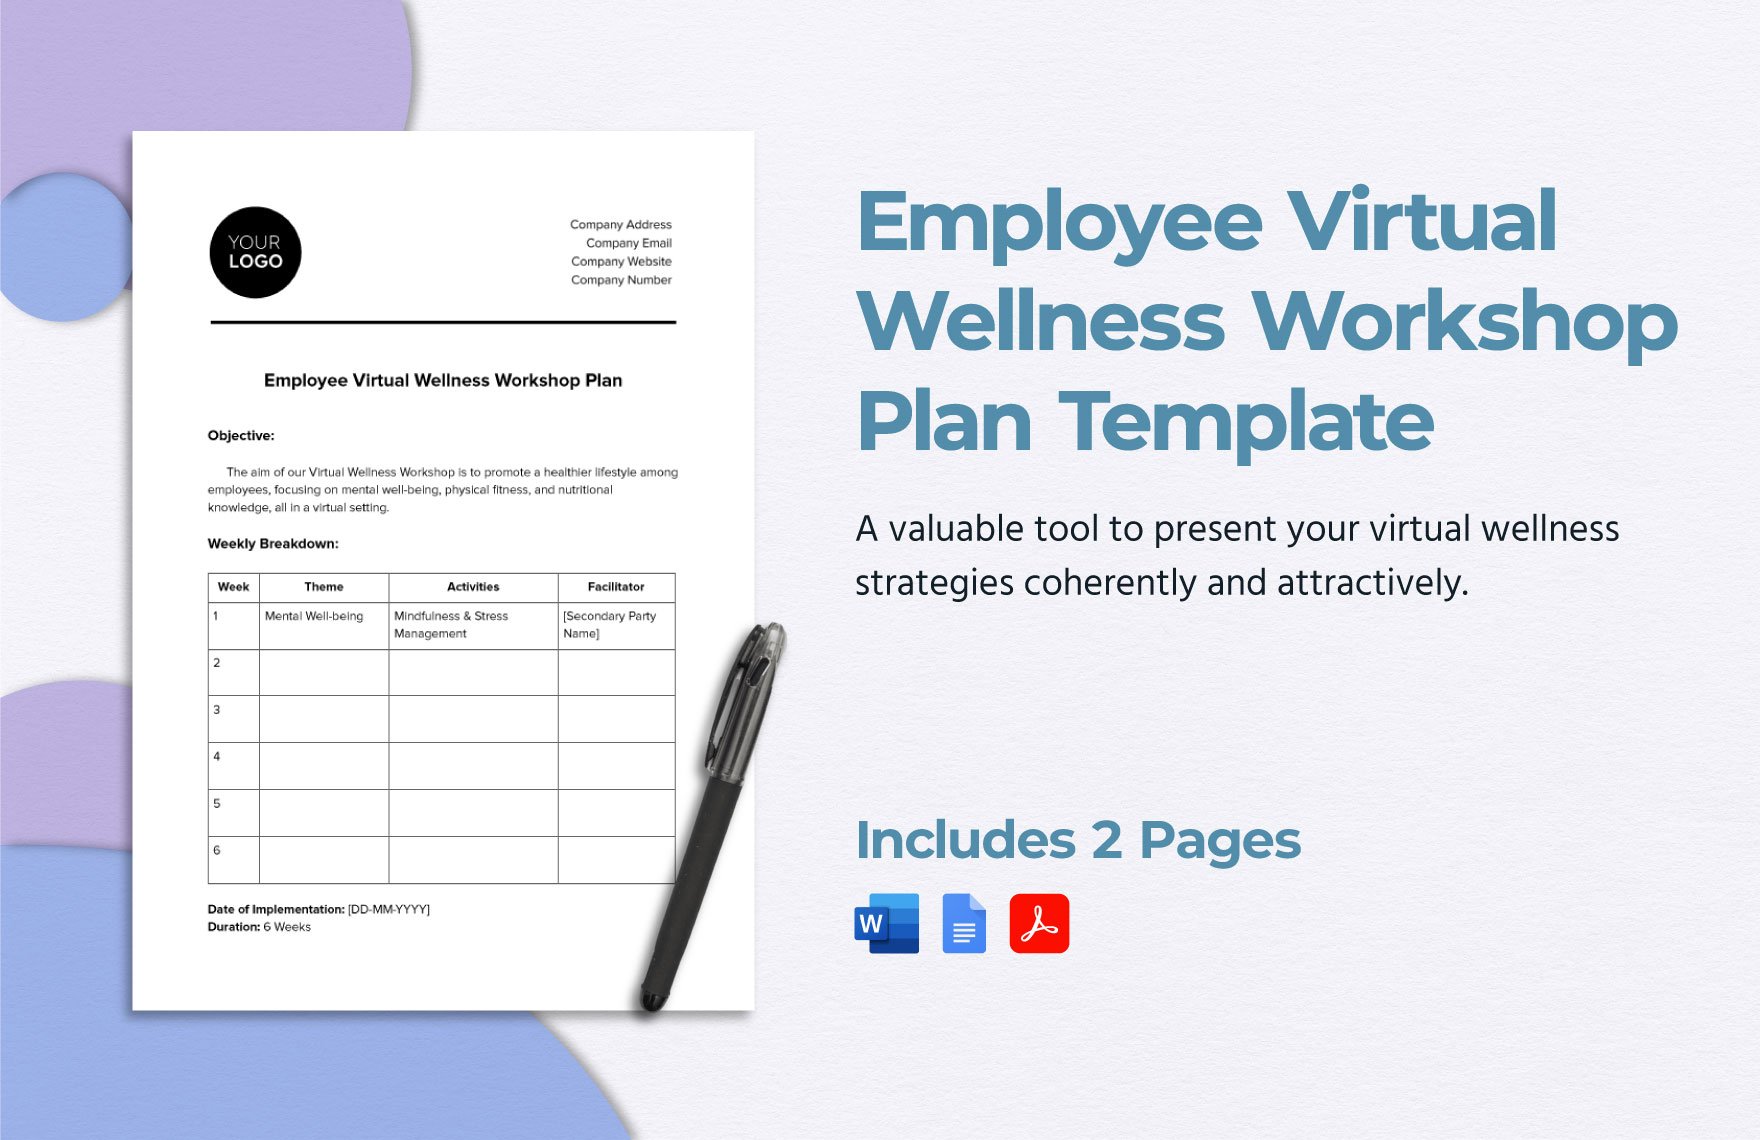 Employee Virtual Wellness Workshop Plan Template